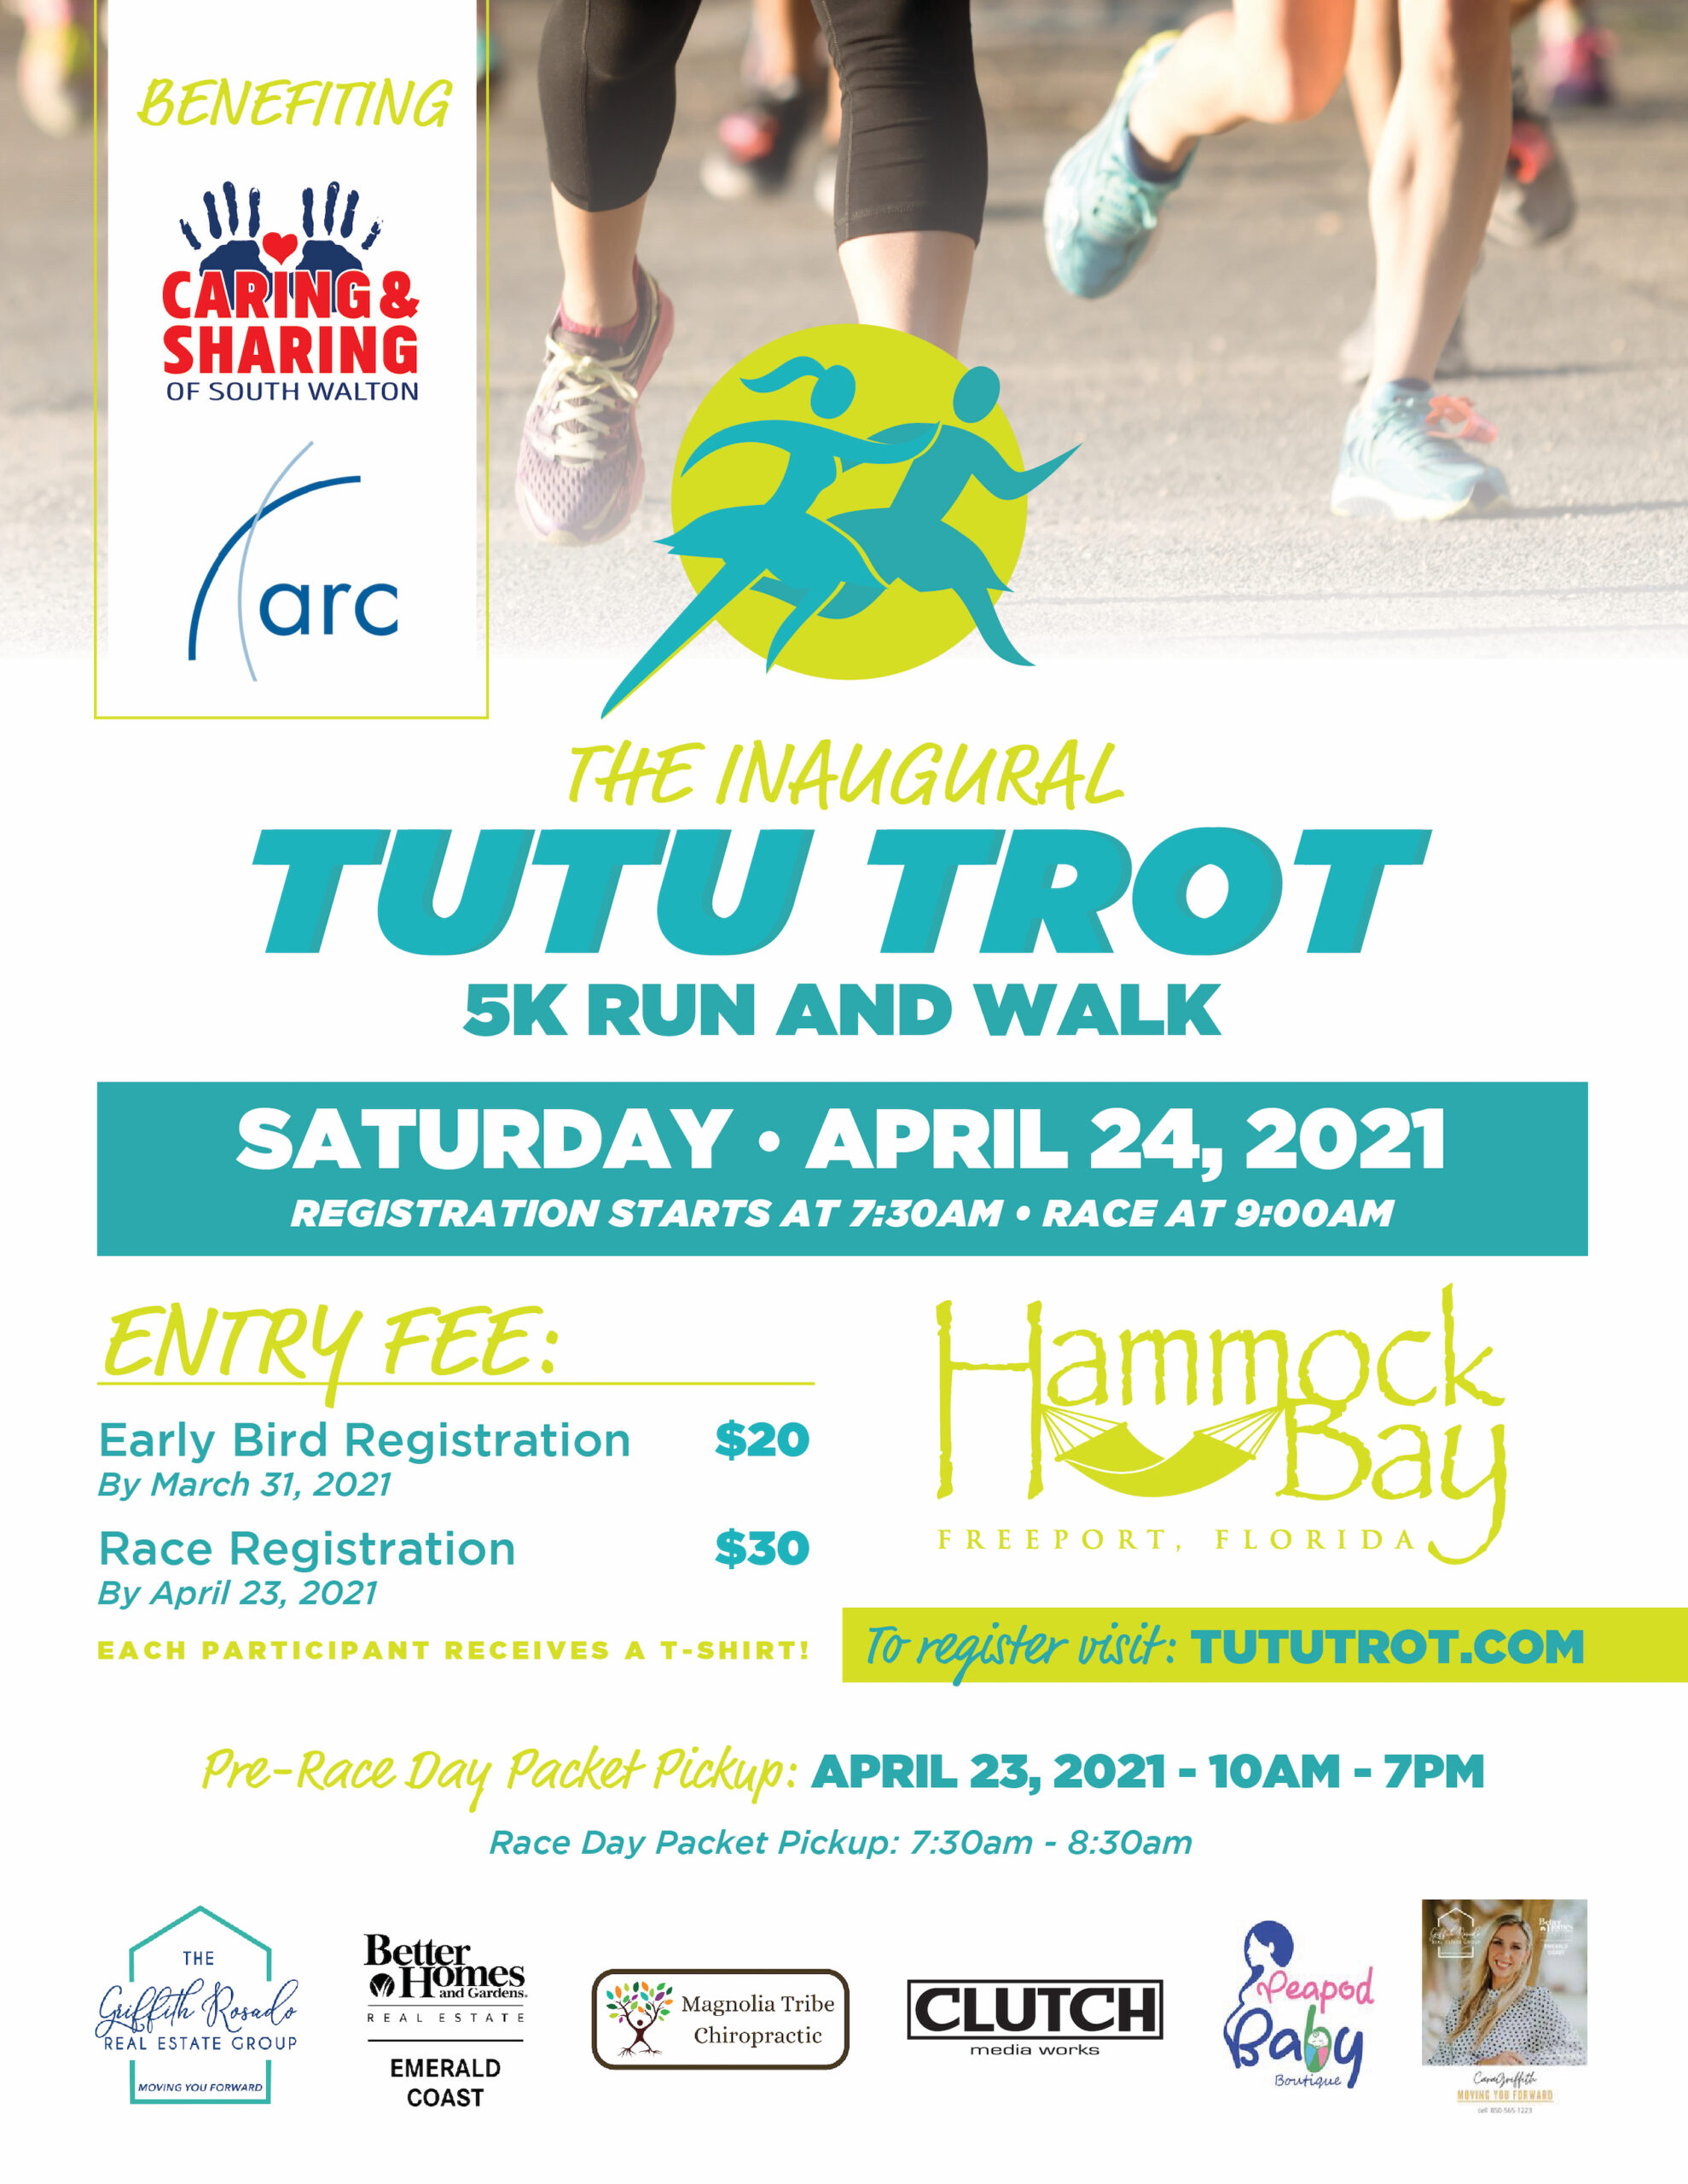 The Inaugural Tutu Trot 5k Run/Walk in Hammock Bay To Benefit ARC of Walton County and Caring and Sharing